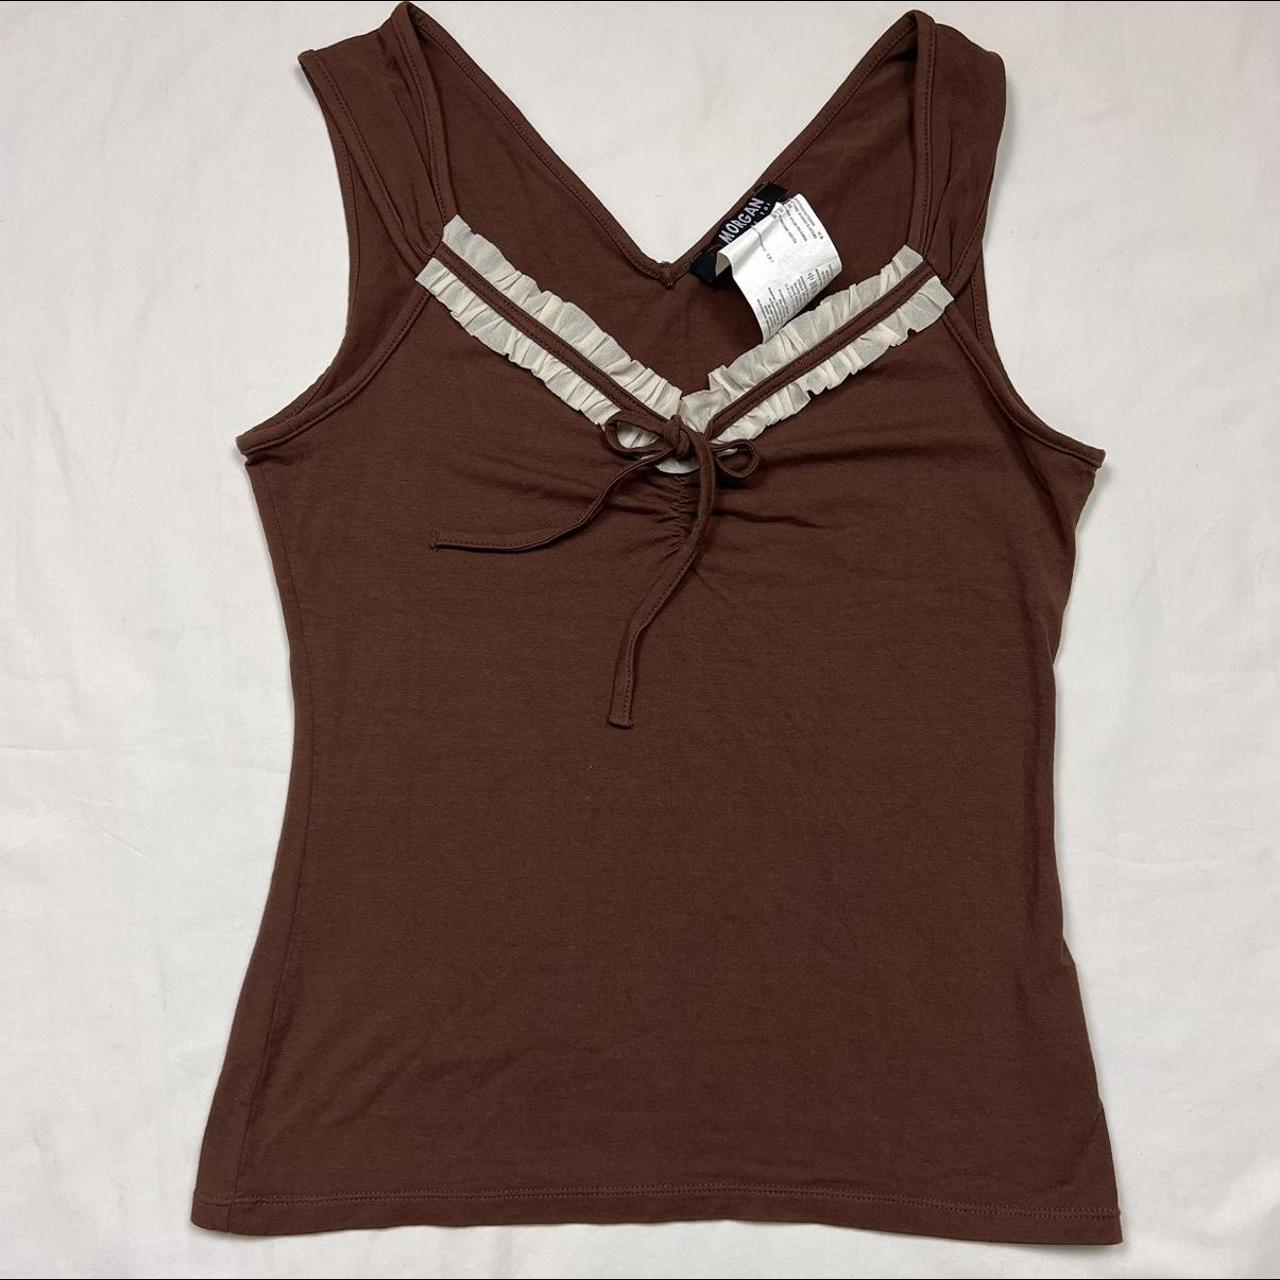 Morgan De Toi Women's Brown and Cream Vests-tanks-camis (2)